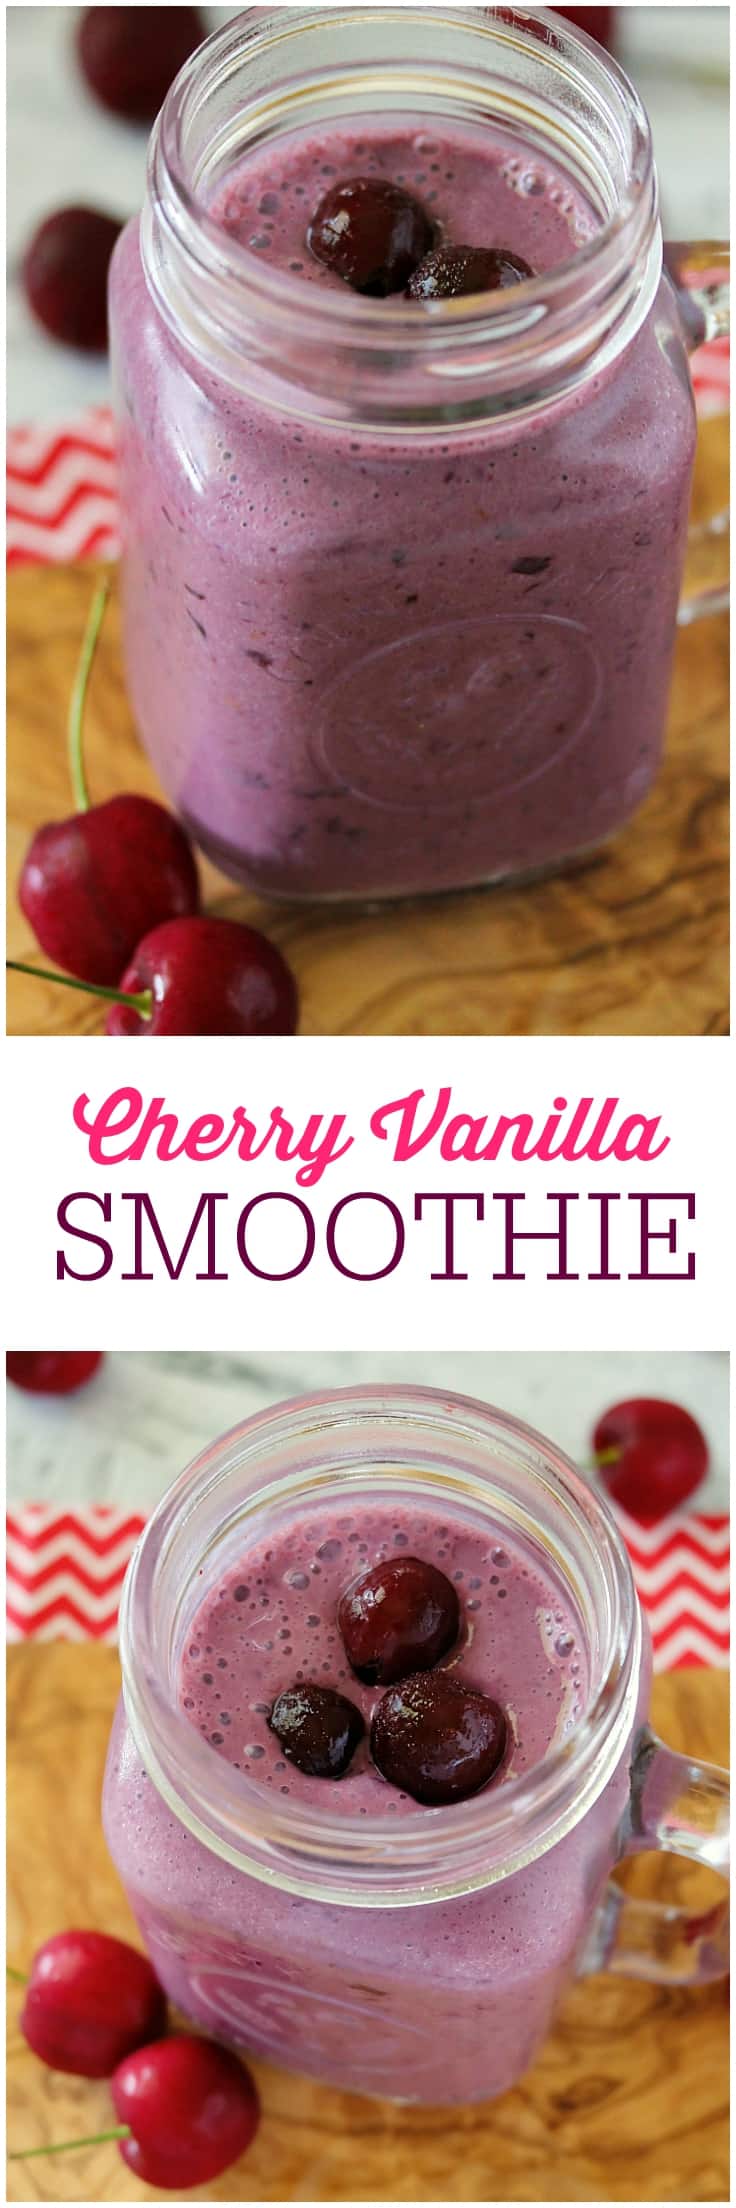 Cherry Vanilla Smoothie - Using convenient frozen sweet cherries, this smoothie is a year-round taste of summer. Vanilla yogurt adds a luscious and creamy texture.